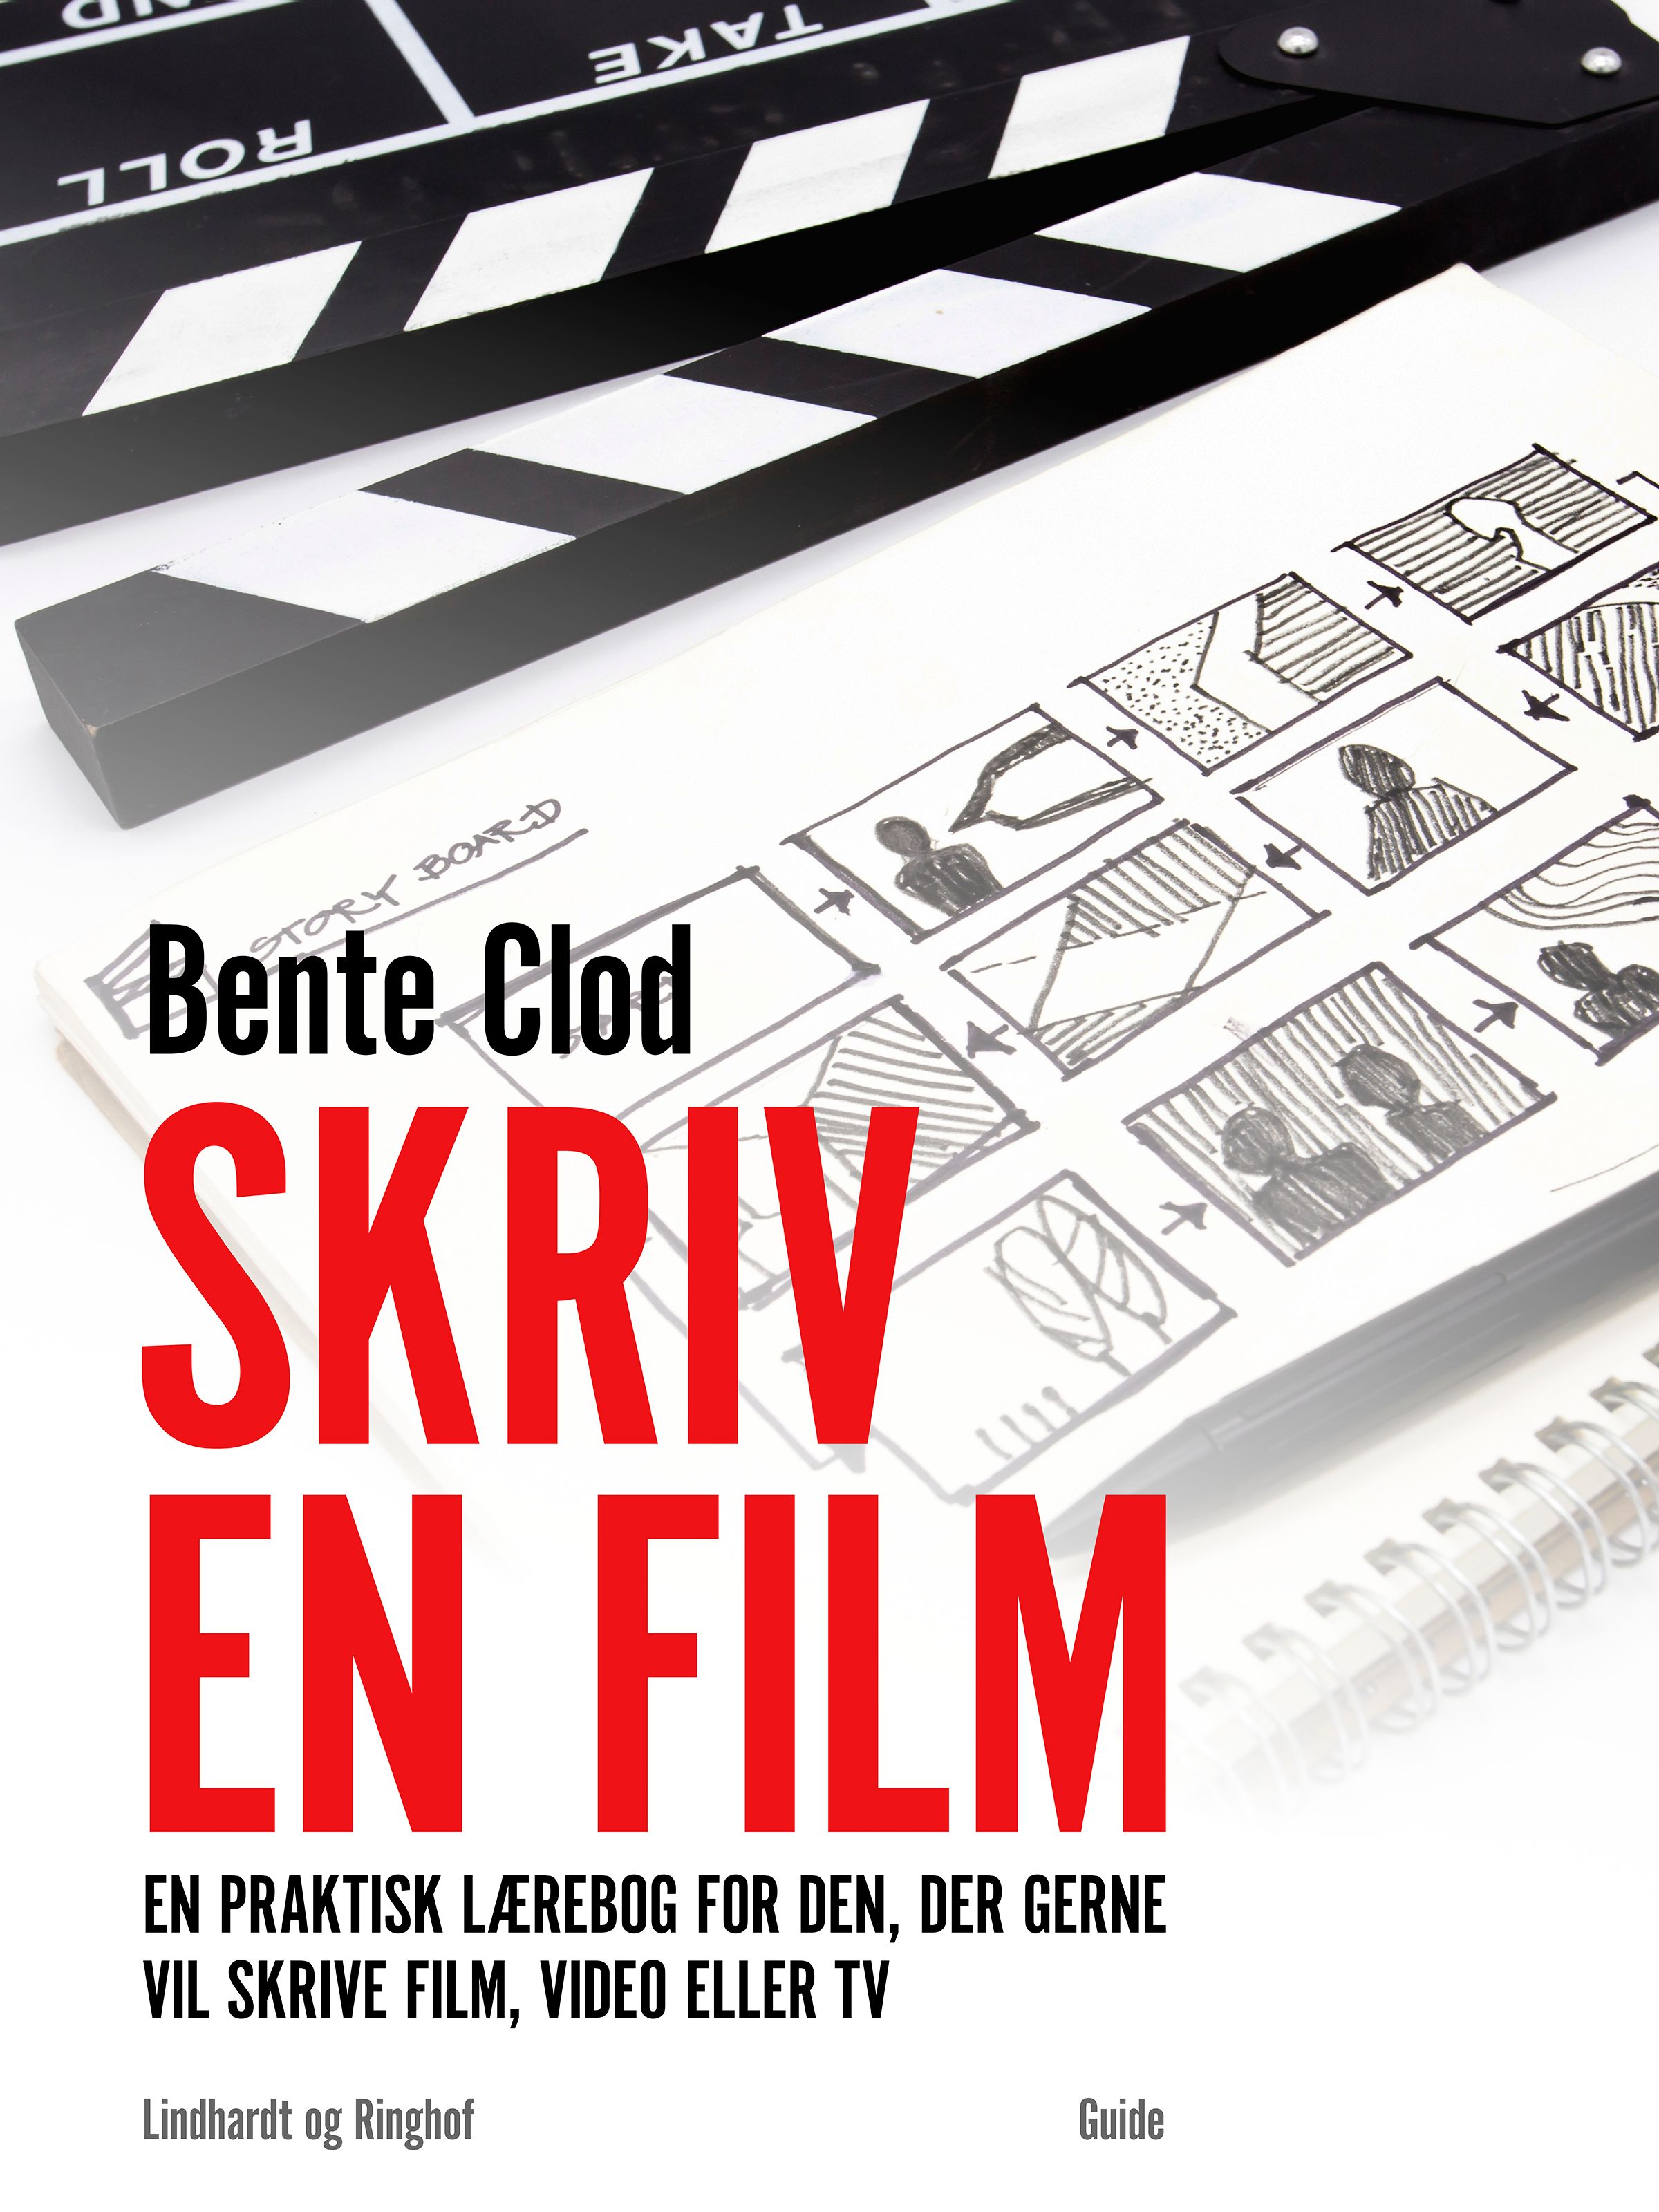 Skriv en film: En praktisk lærebog for den, der gerne vil skrive film, video eller tv, e-bok av Bente Clod